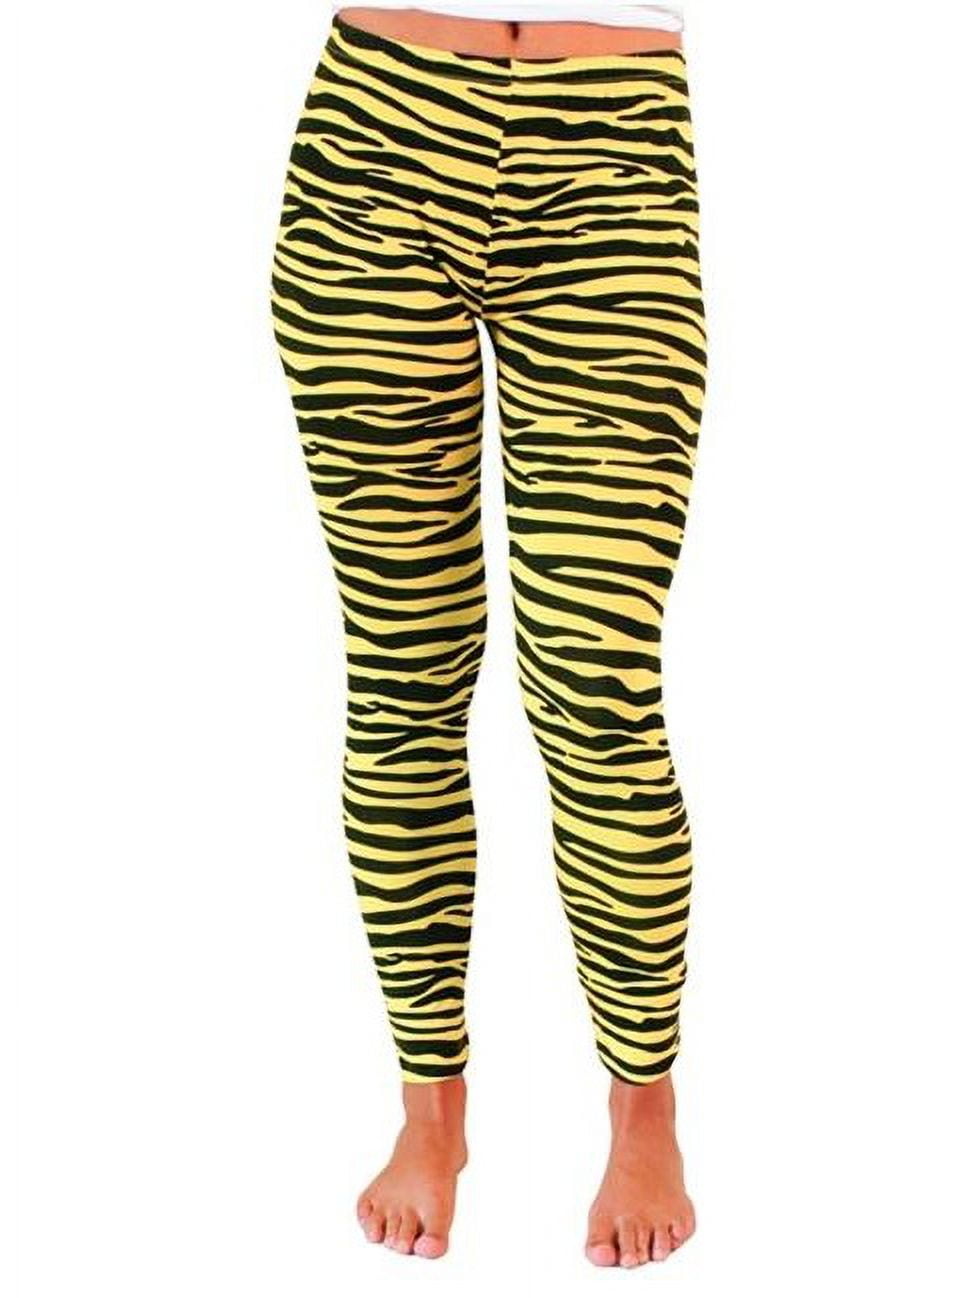 Game Day Leggings LZ01-L Tiger Stripes Leggings - Yellow & Black, Large  